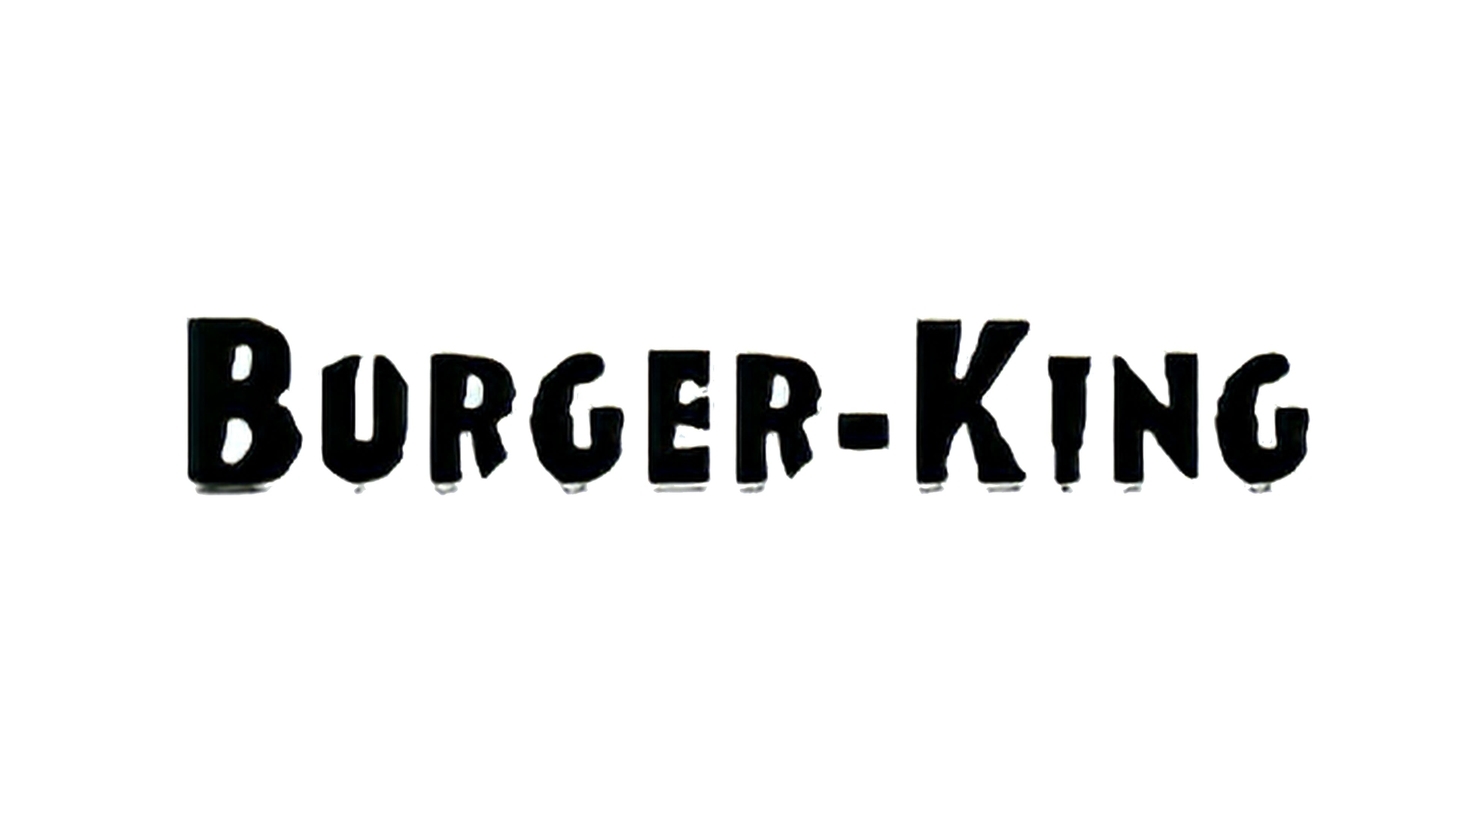 Burger king sign 1954 1957